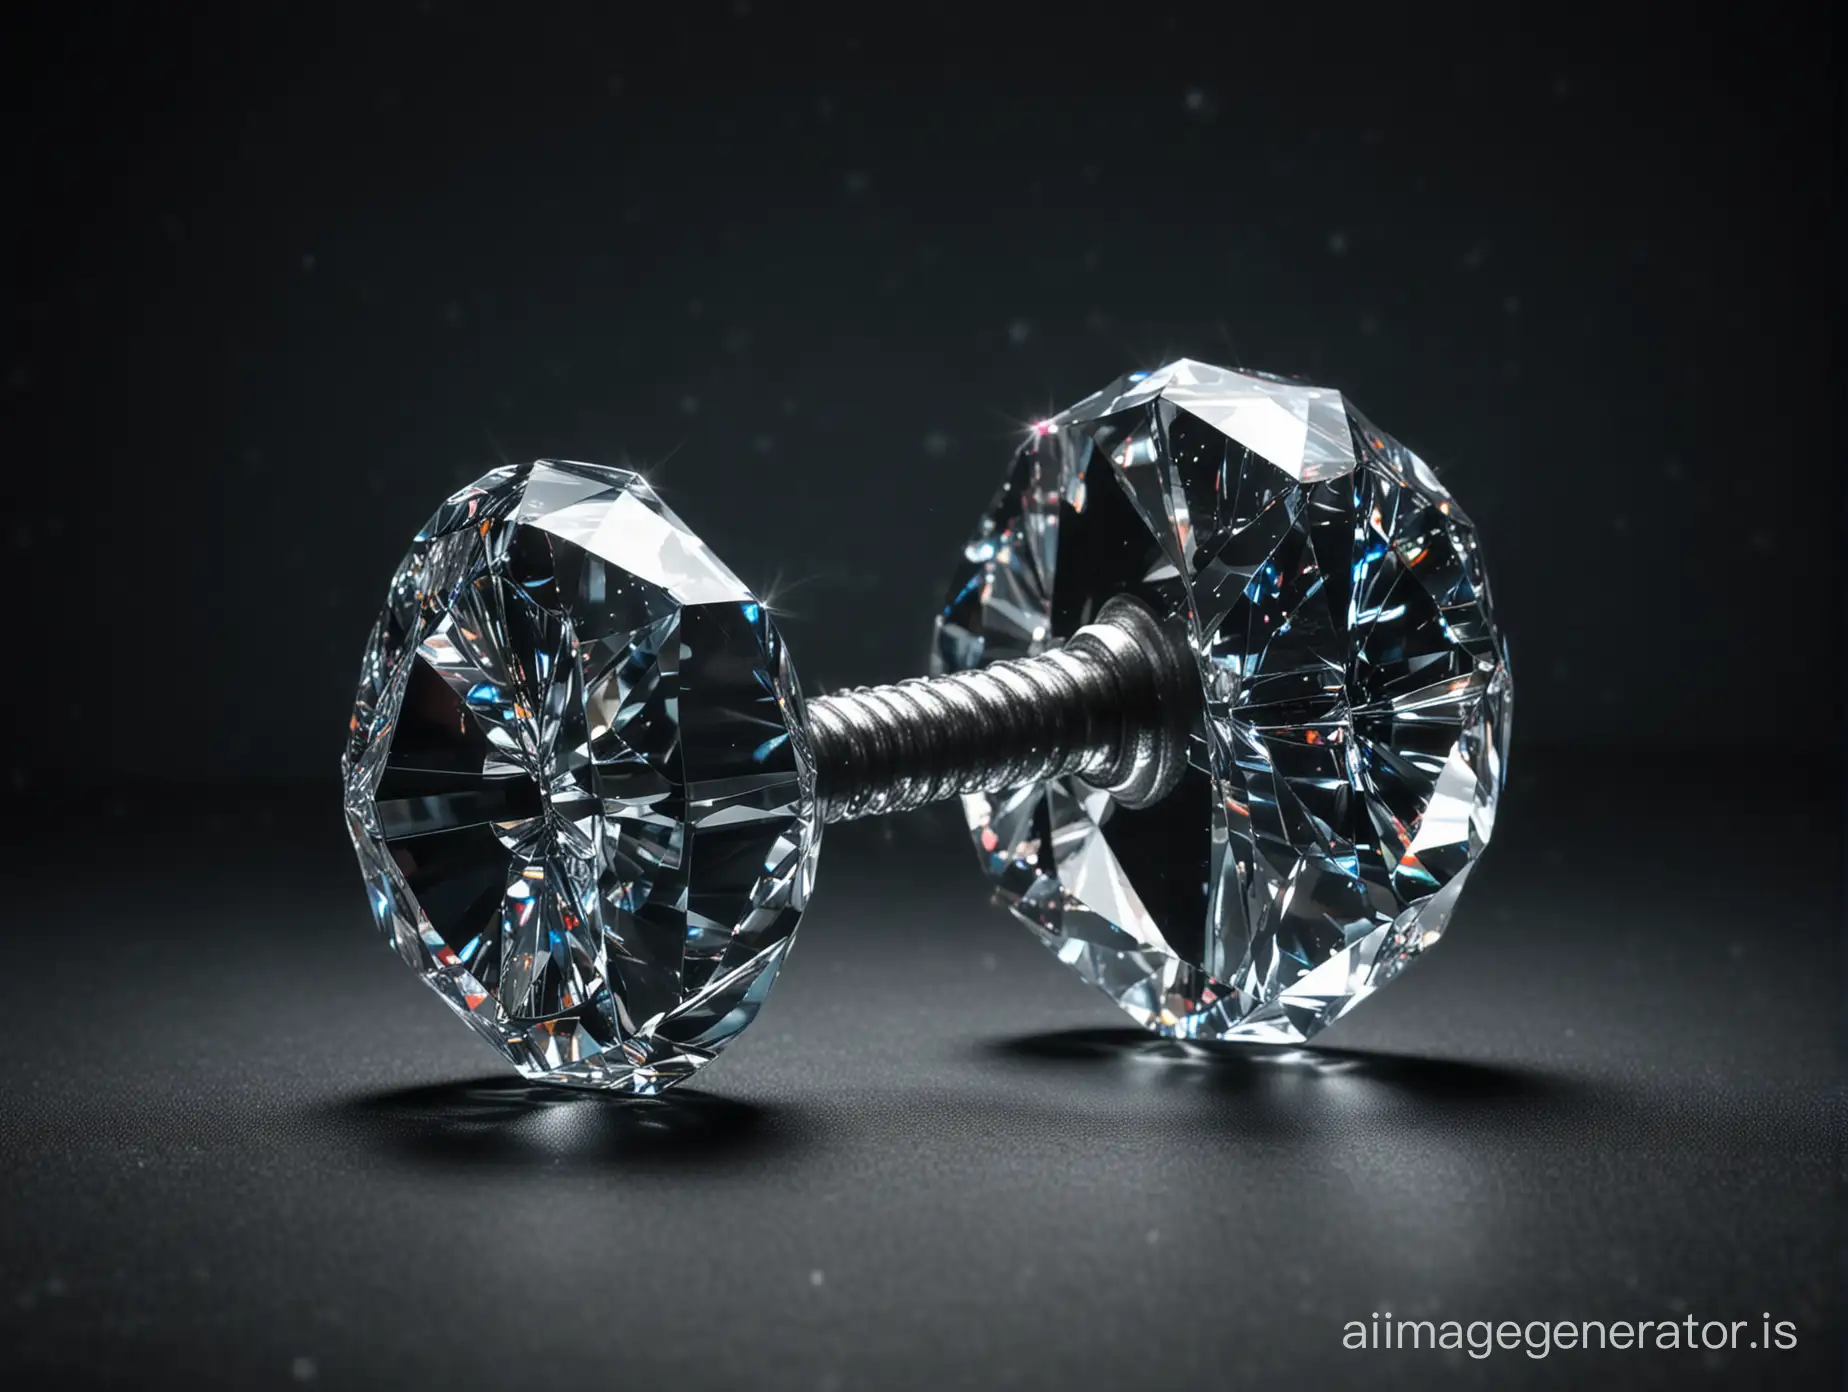 Premium-Diamond-Dumbbell-Sparkling-Drop-on-Dark-Background